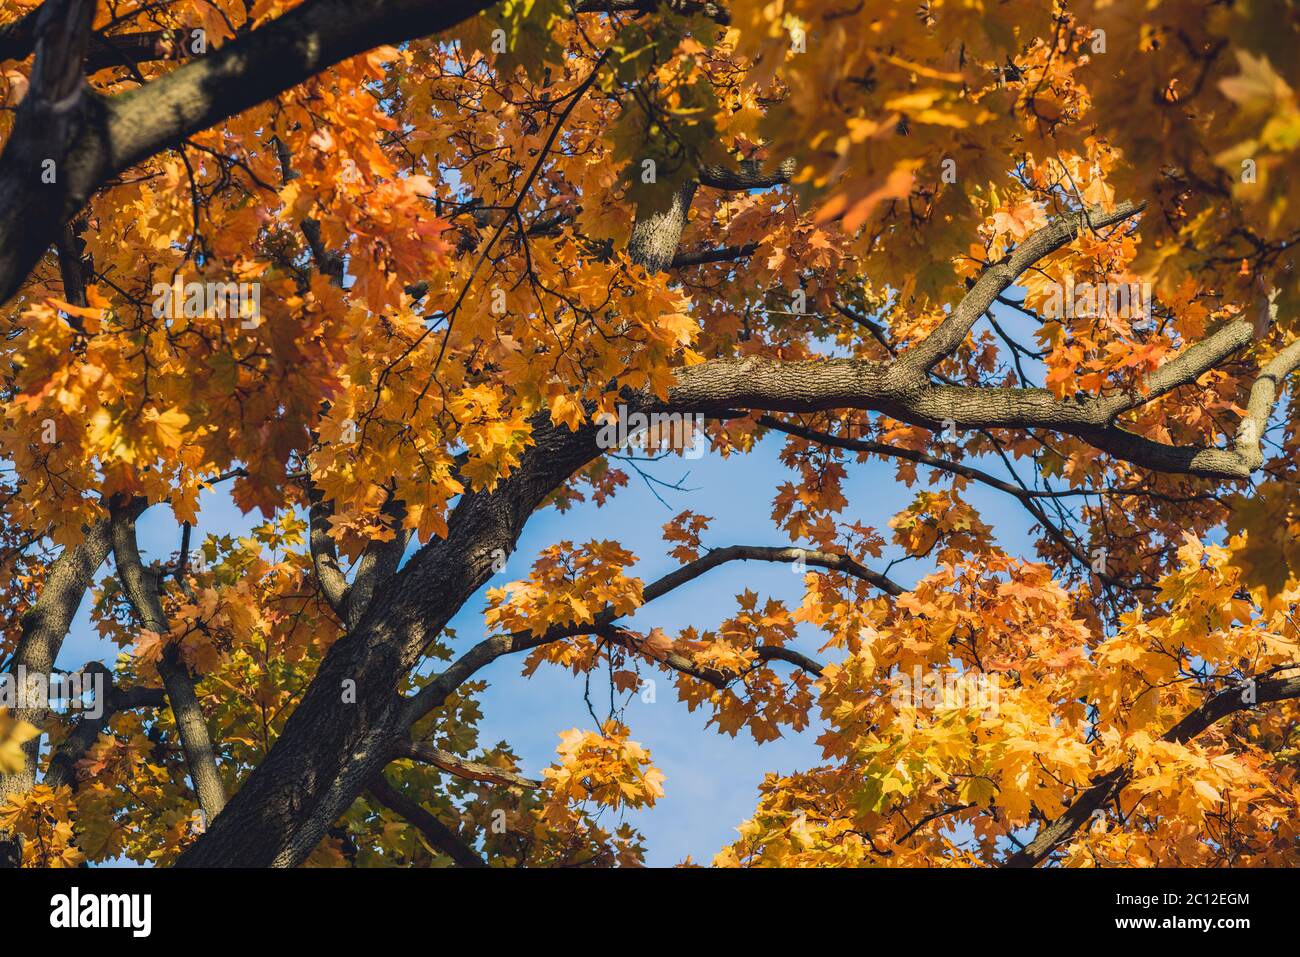 Autumn orange vivid mapple tree leaves with the blue sky background Stock Photo